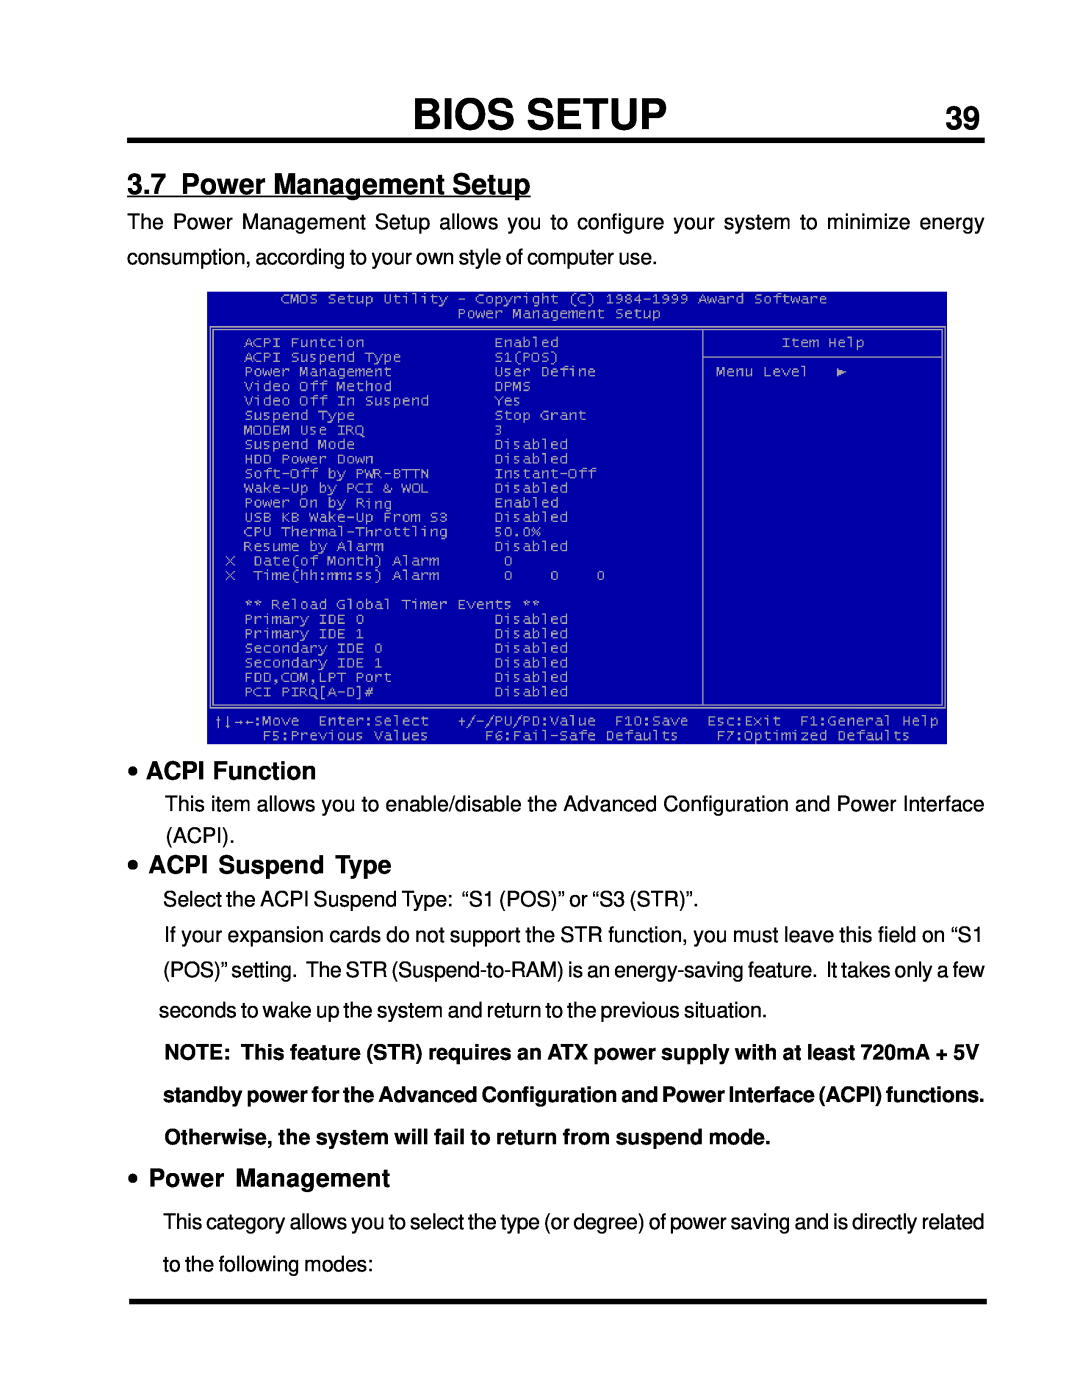 Intel TS-ASP3 user manual Power Management Setup, •ACPI Function, •ACPI Suspend Type, •Power Management, Bios Setup 